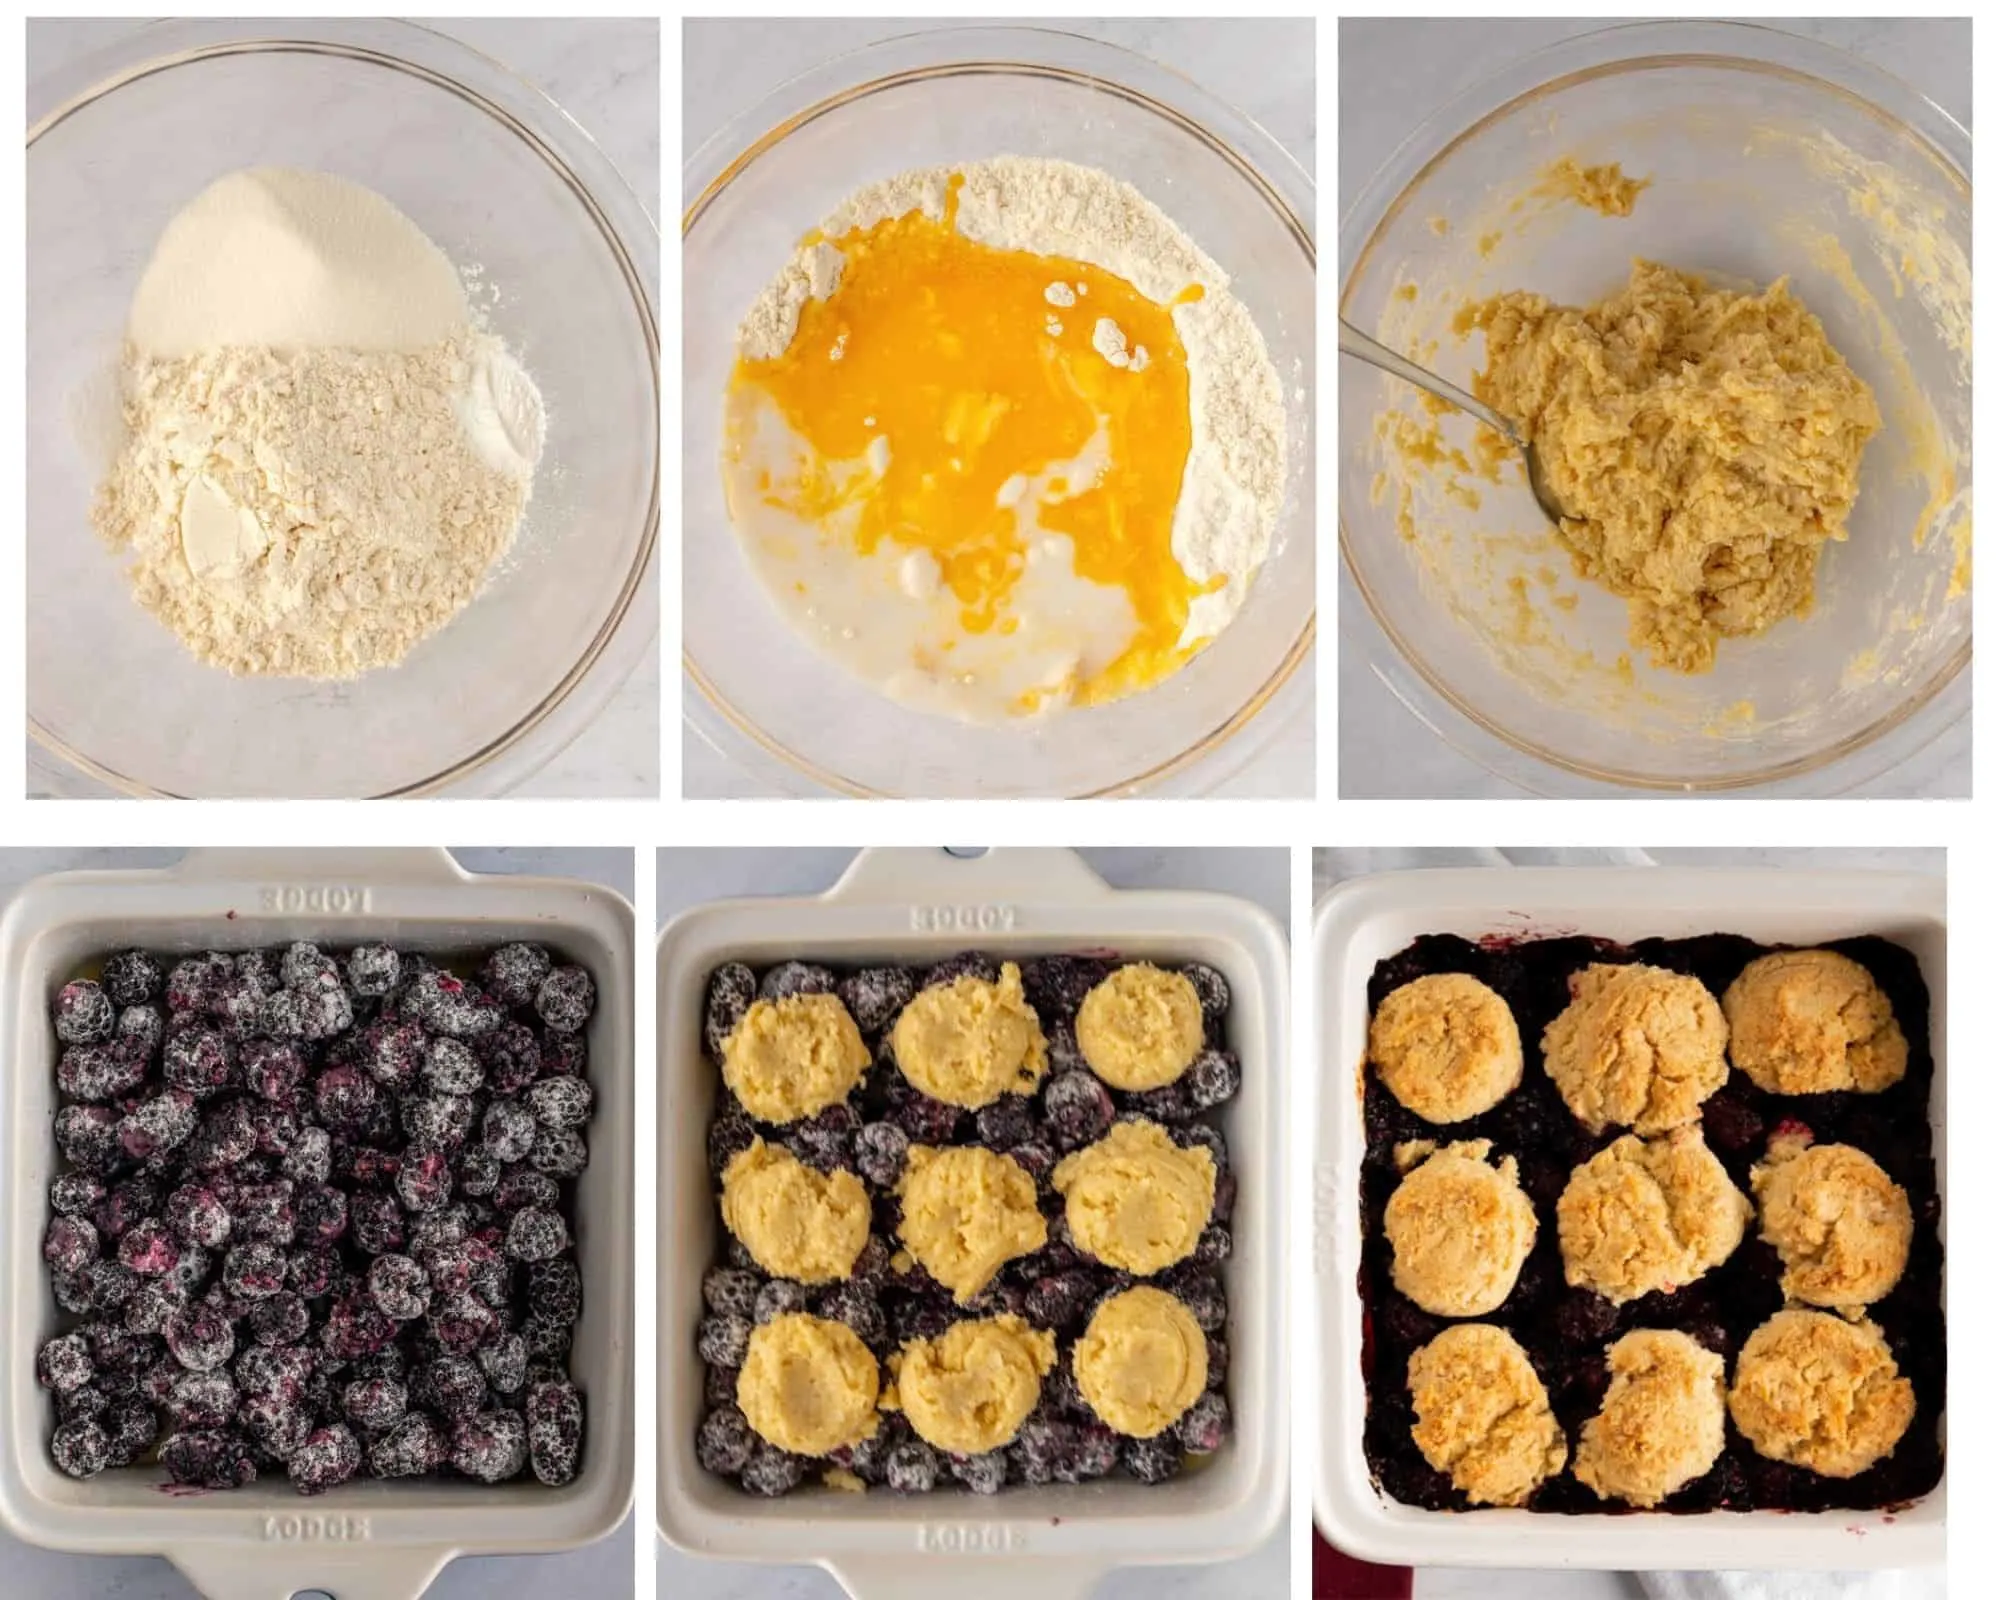 Photos showing steps to make vegan blackberry cobbler